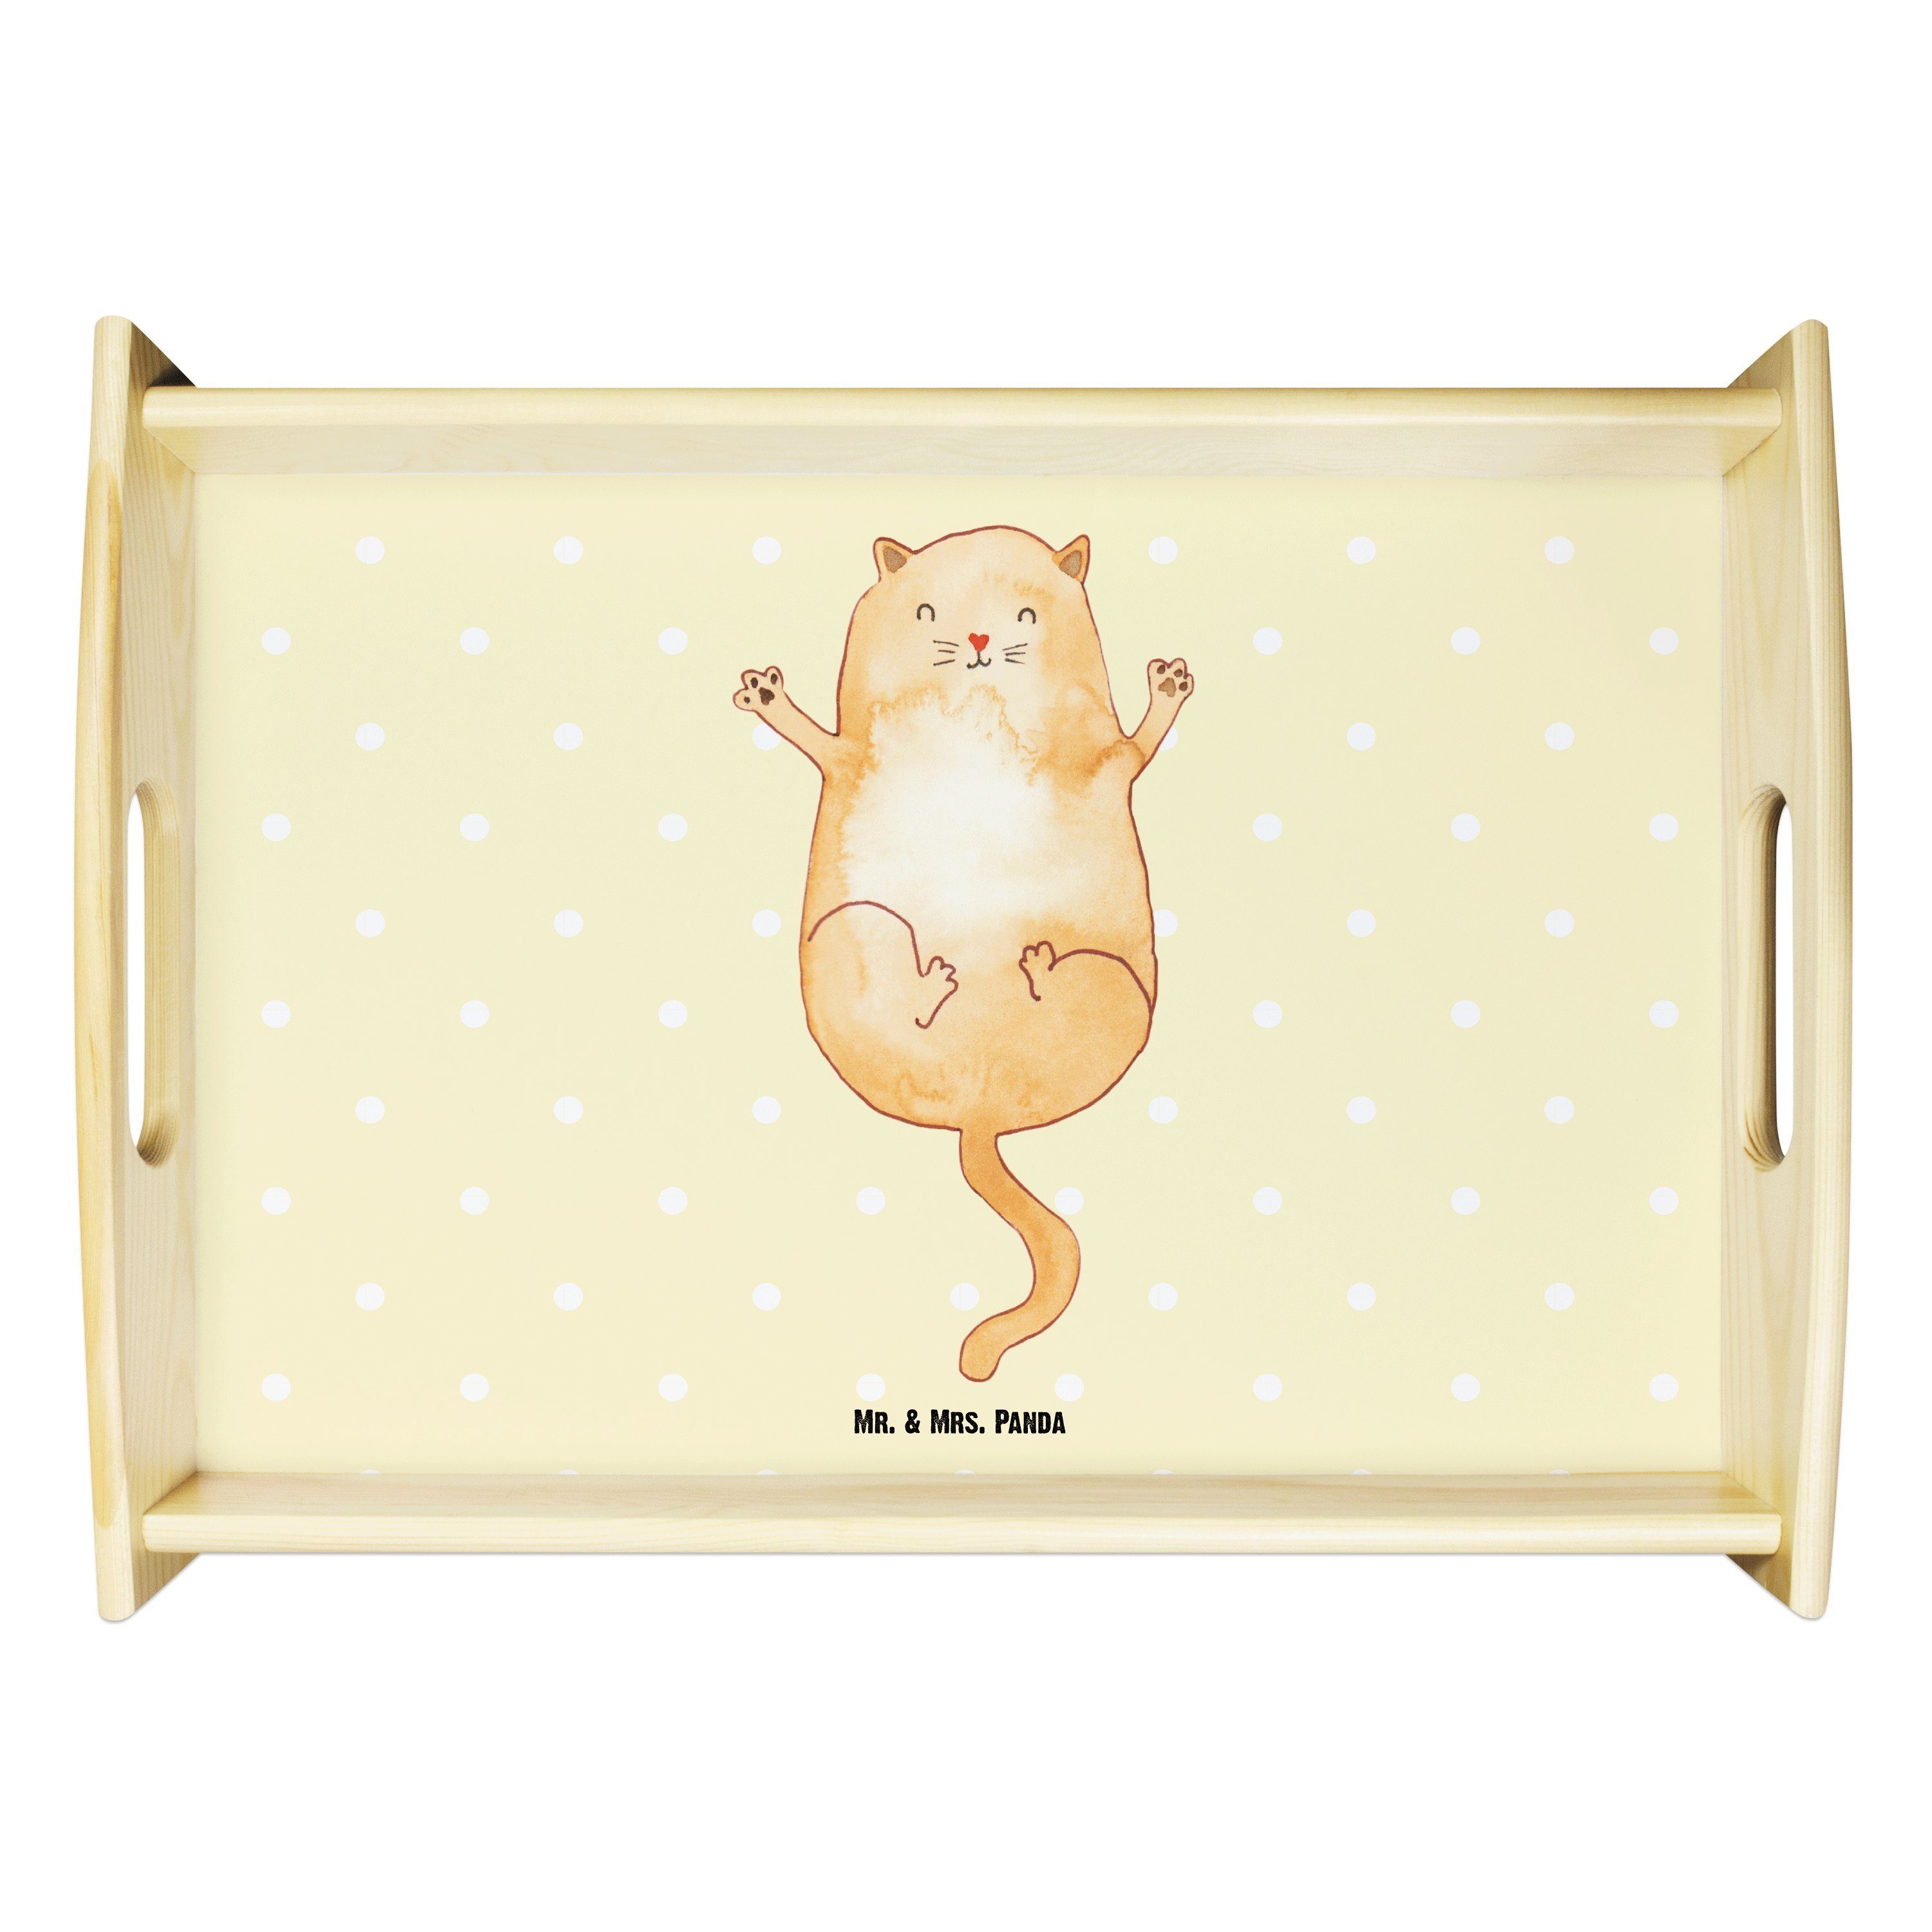 Mr. & Mrs. Panda Tablett Katzen Umarmen - Gelb Pastell - Geschenk, Küchentablett, Katzenliebha, Echtholz lasiert, (1-tlg)